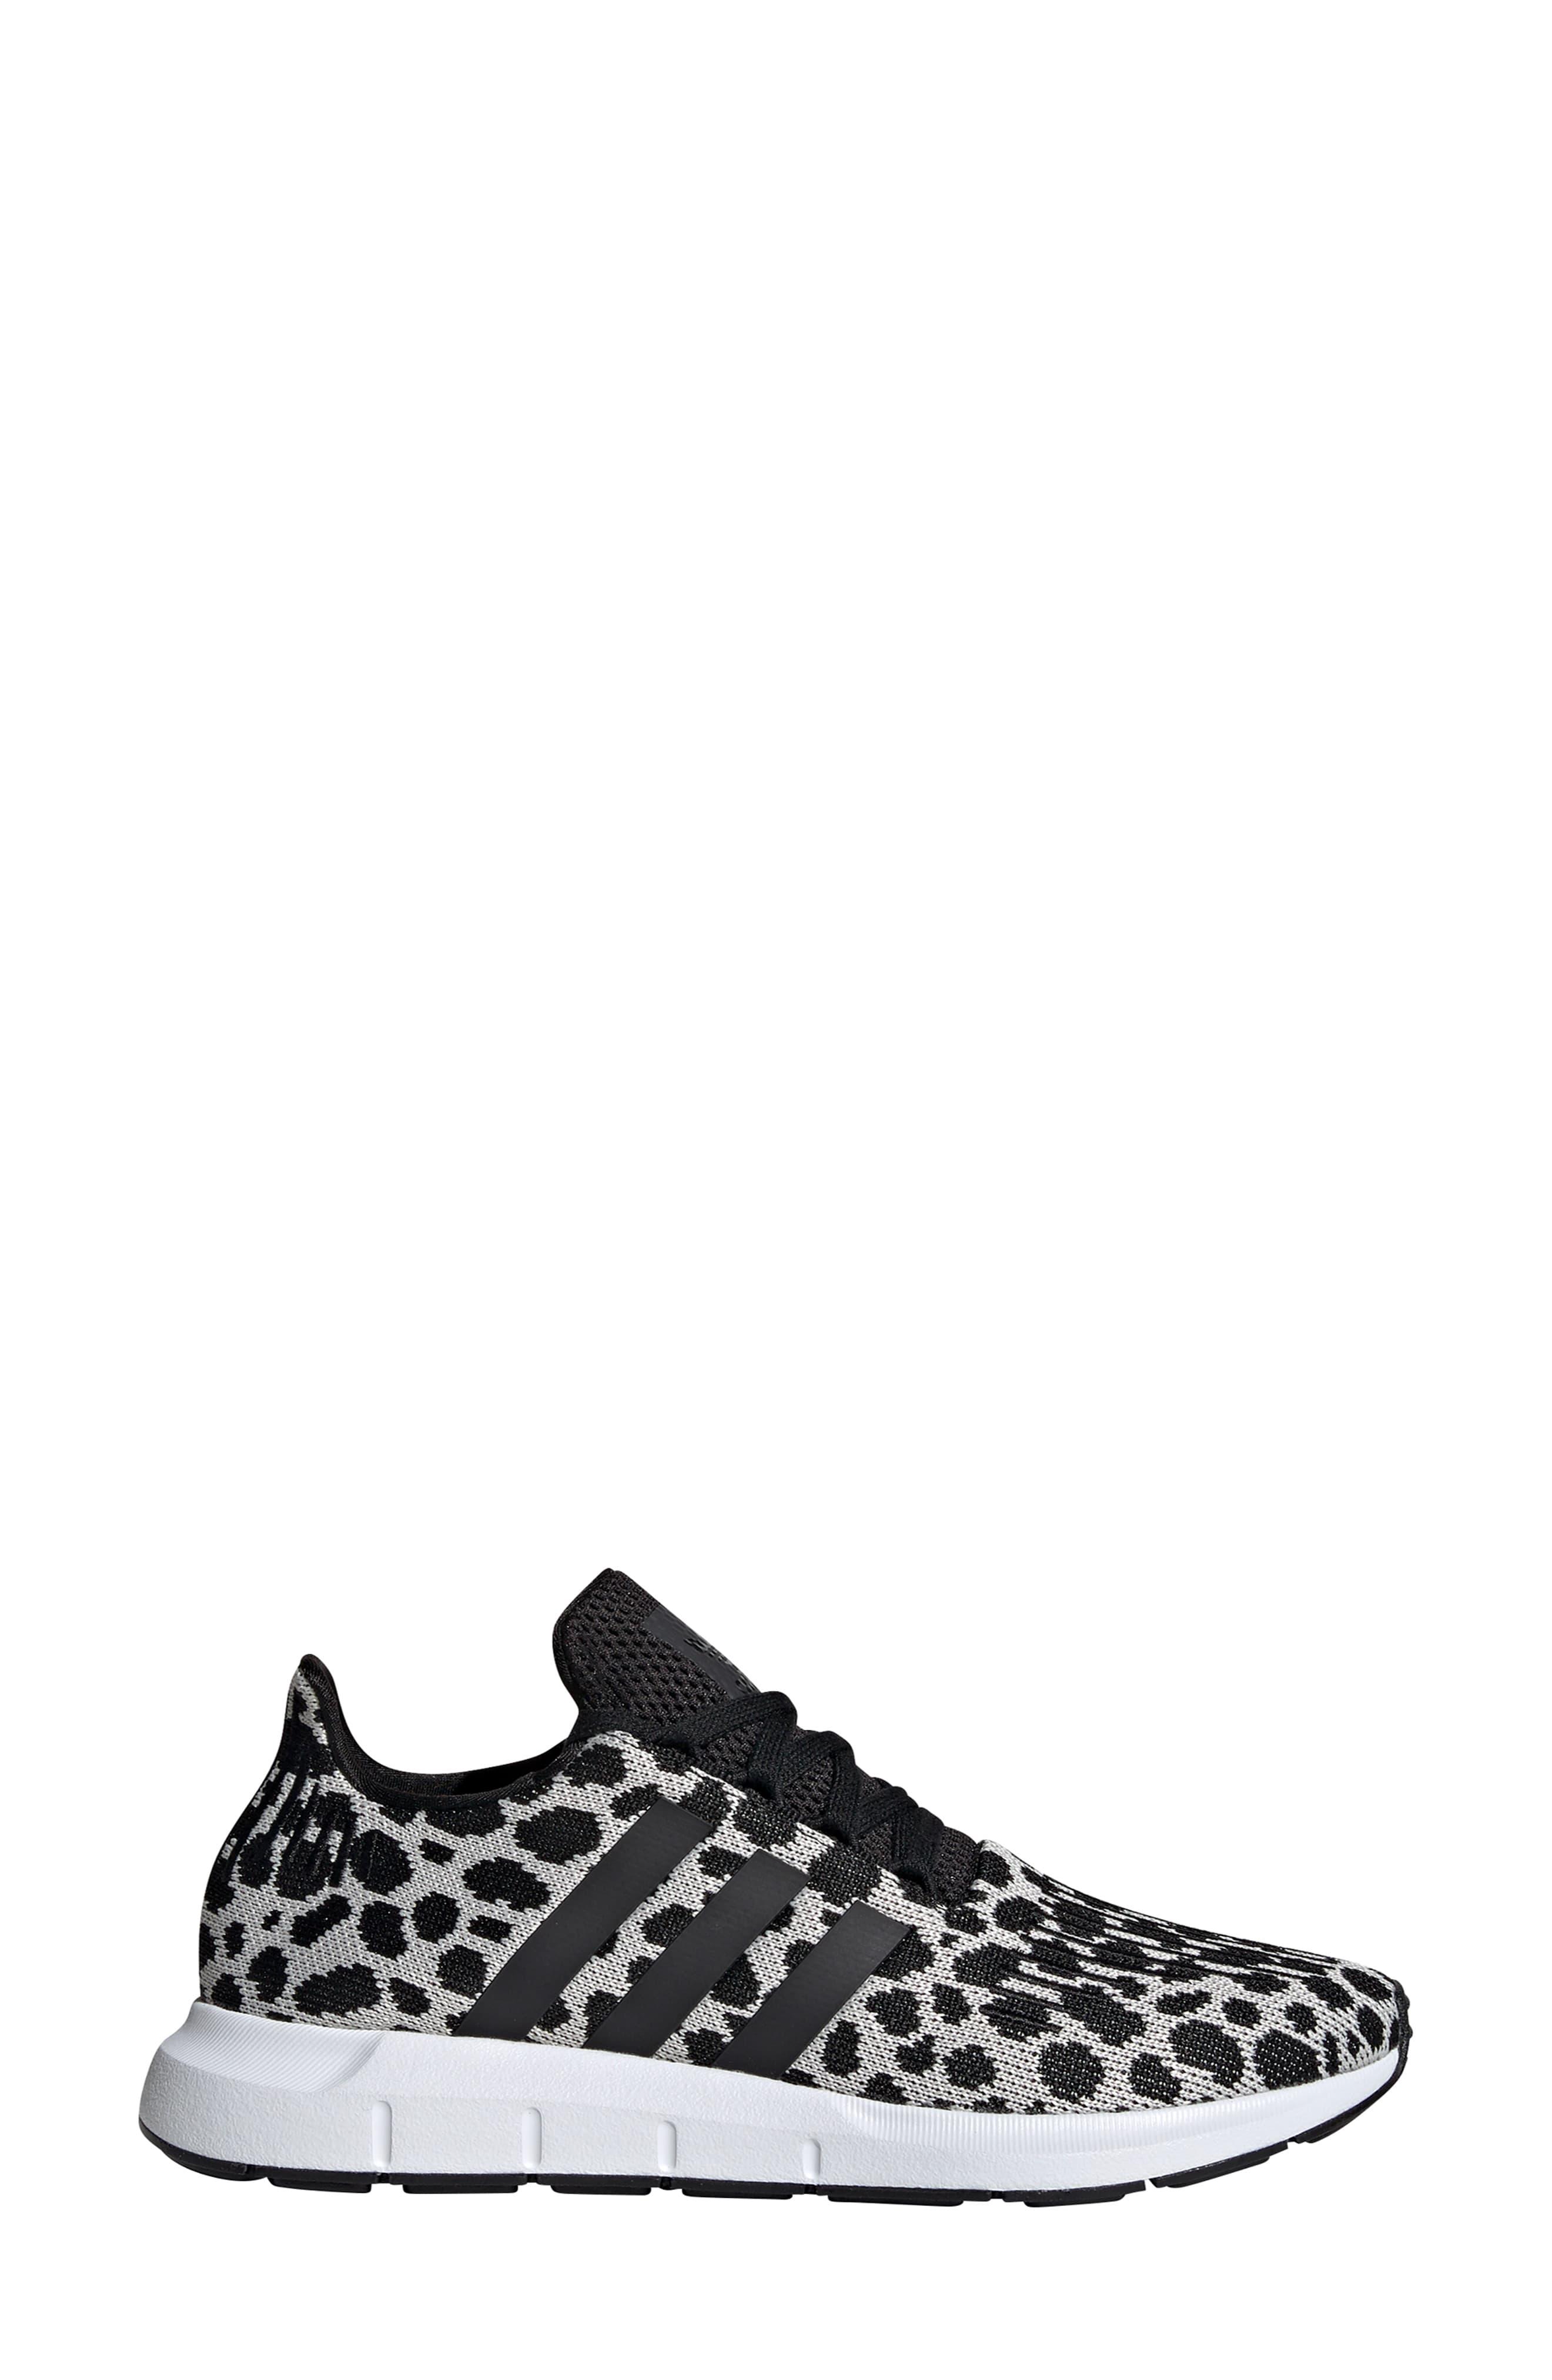 adidas Rubber Swift Run Sneaker in White, Black (Black) | Lyst